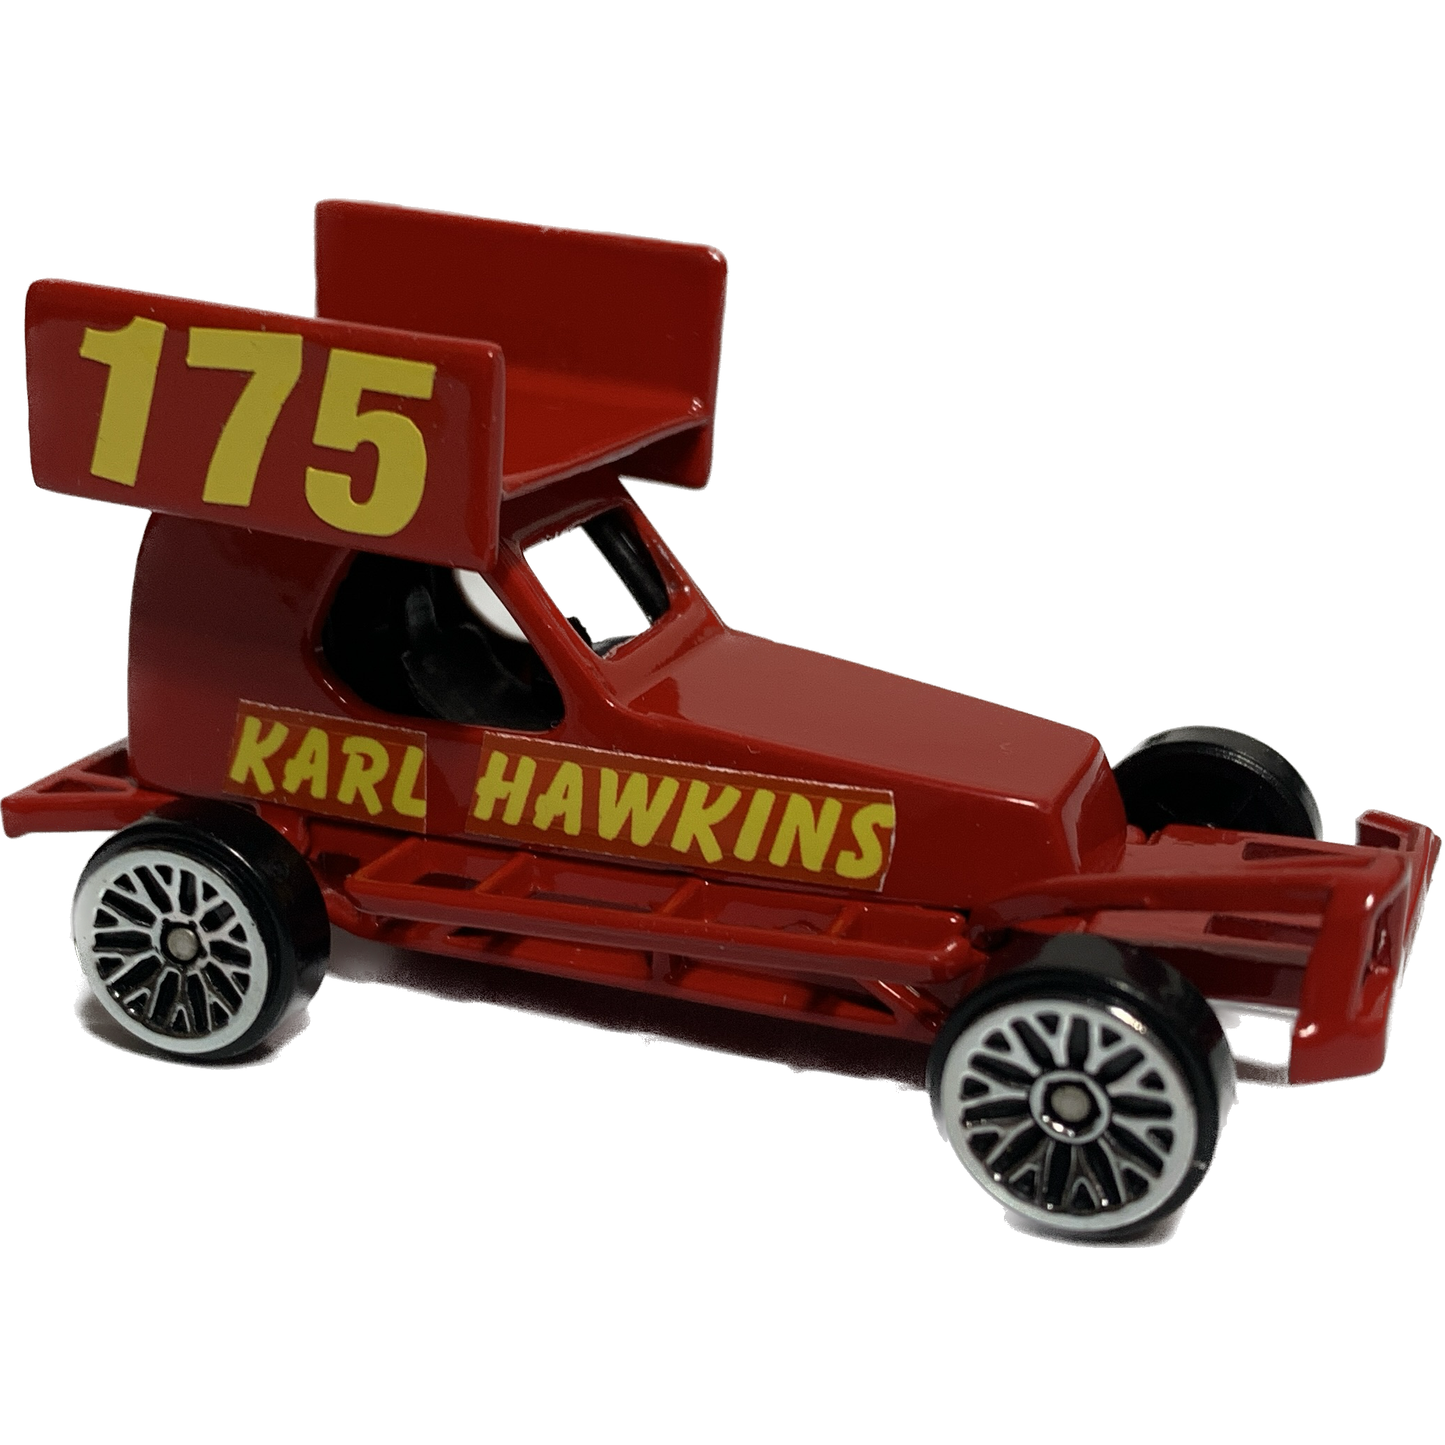 #175 Karl Hawkins